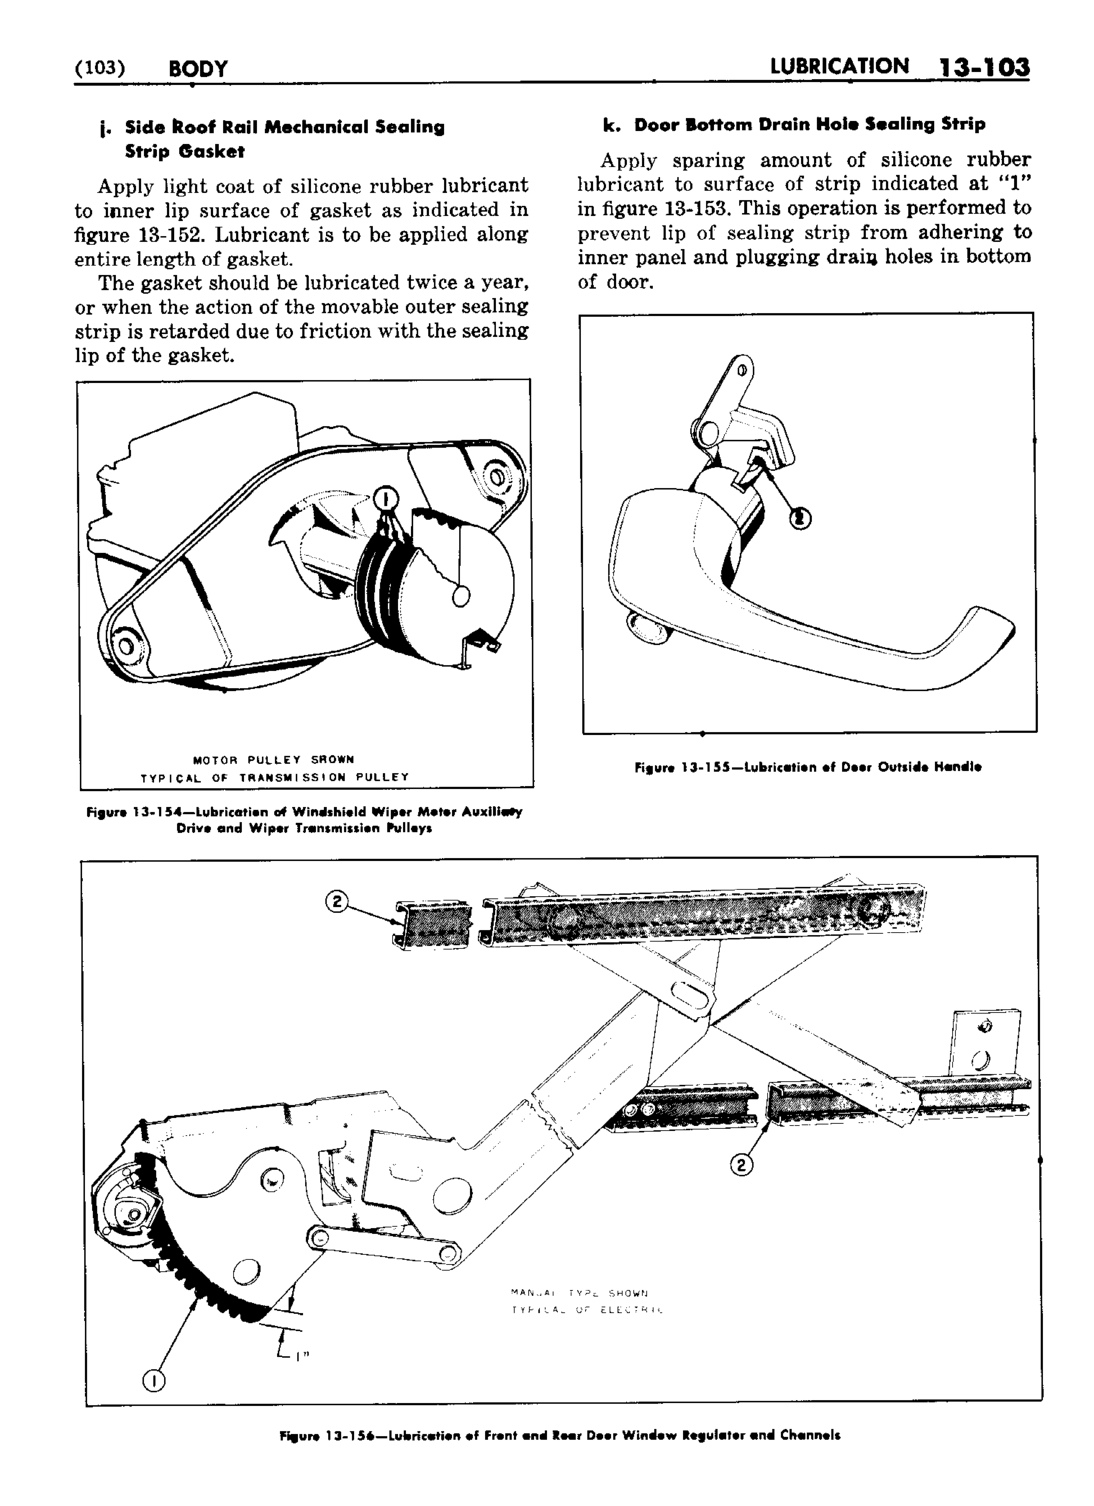 n_1958 Buick Body Service Manual-104-104.jpg